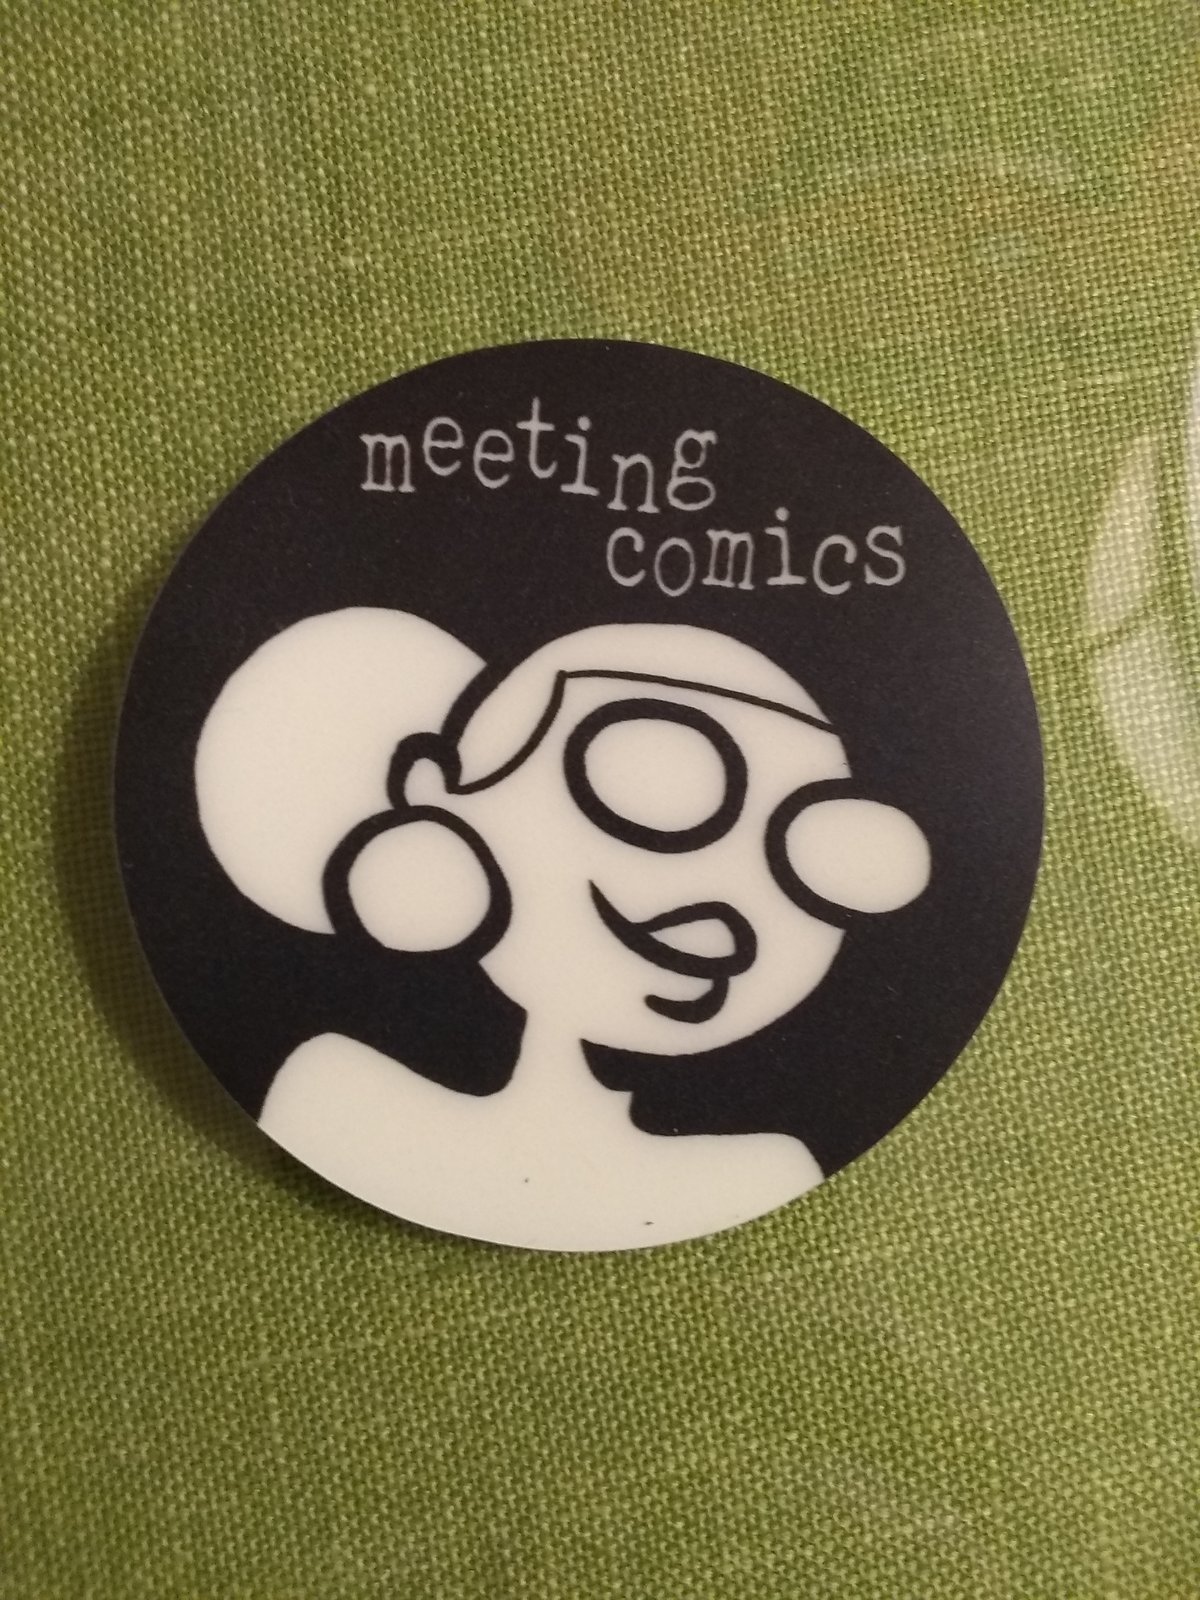 Image of Meeting Comics AFTER DARK sticker